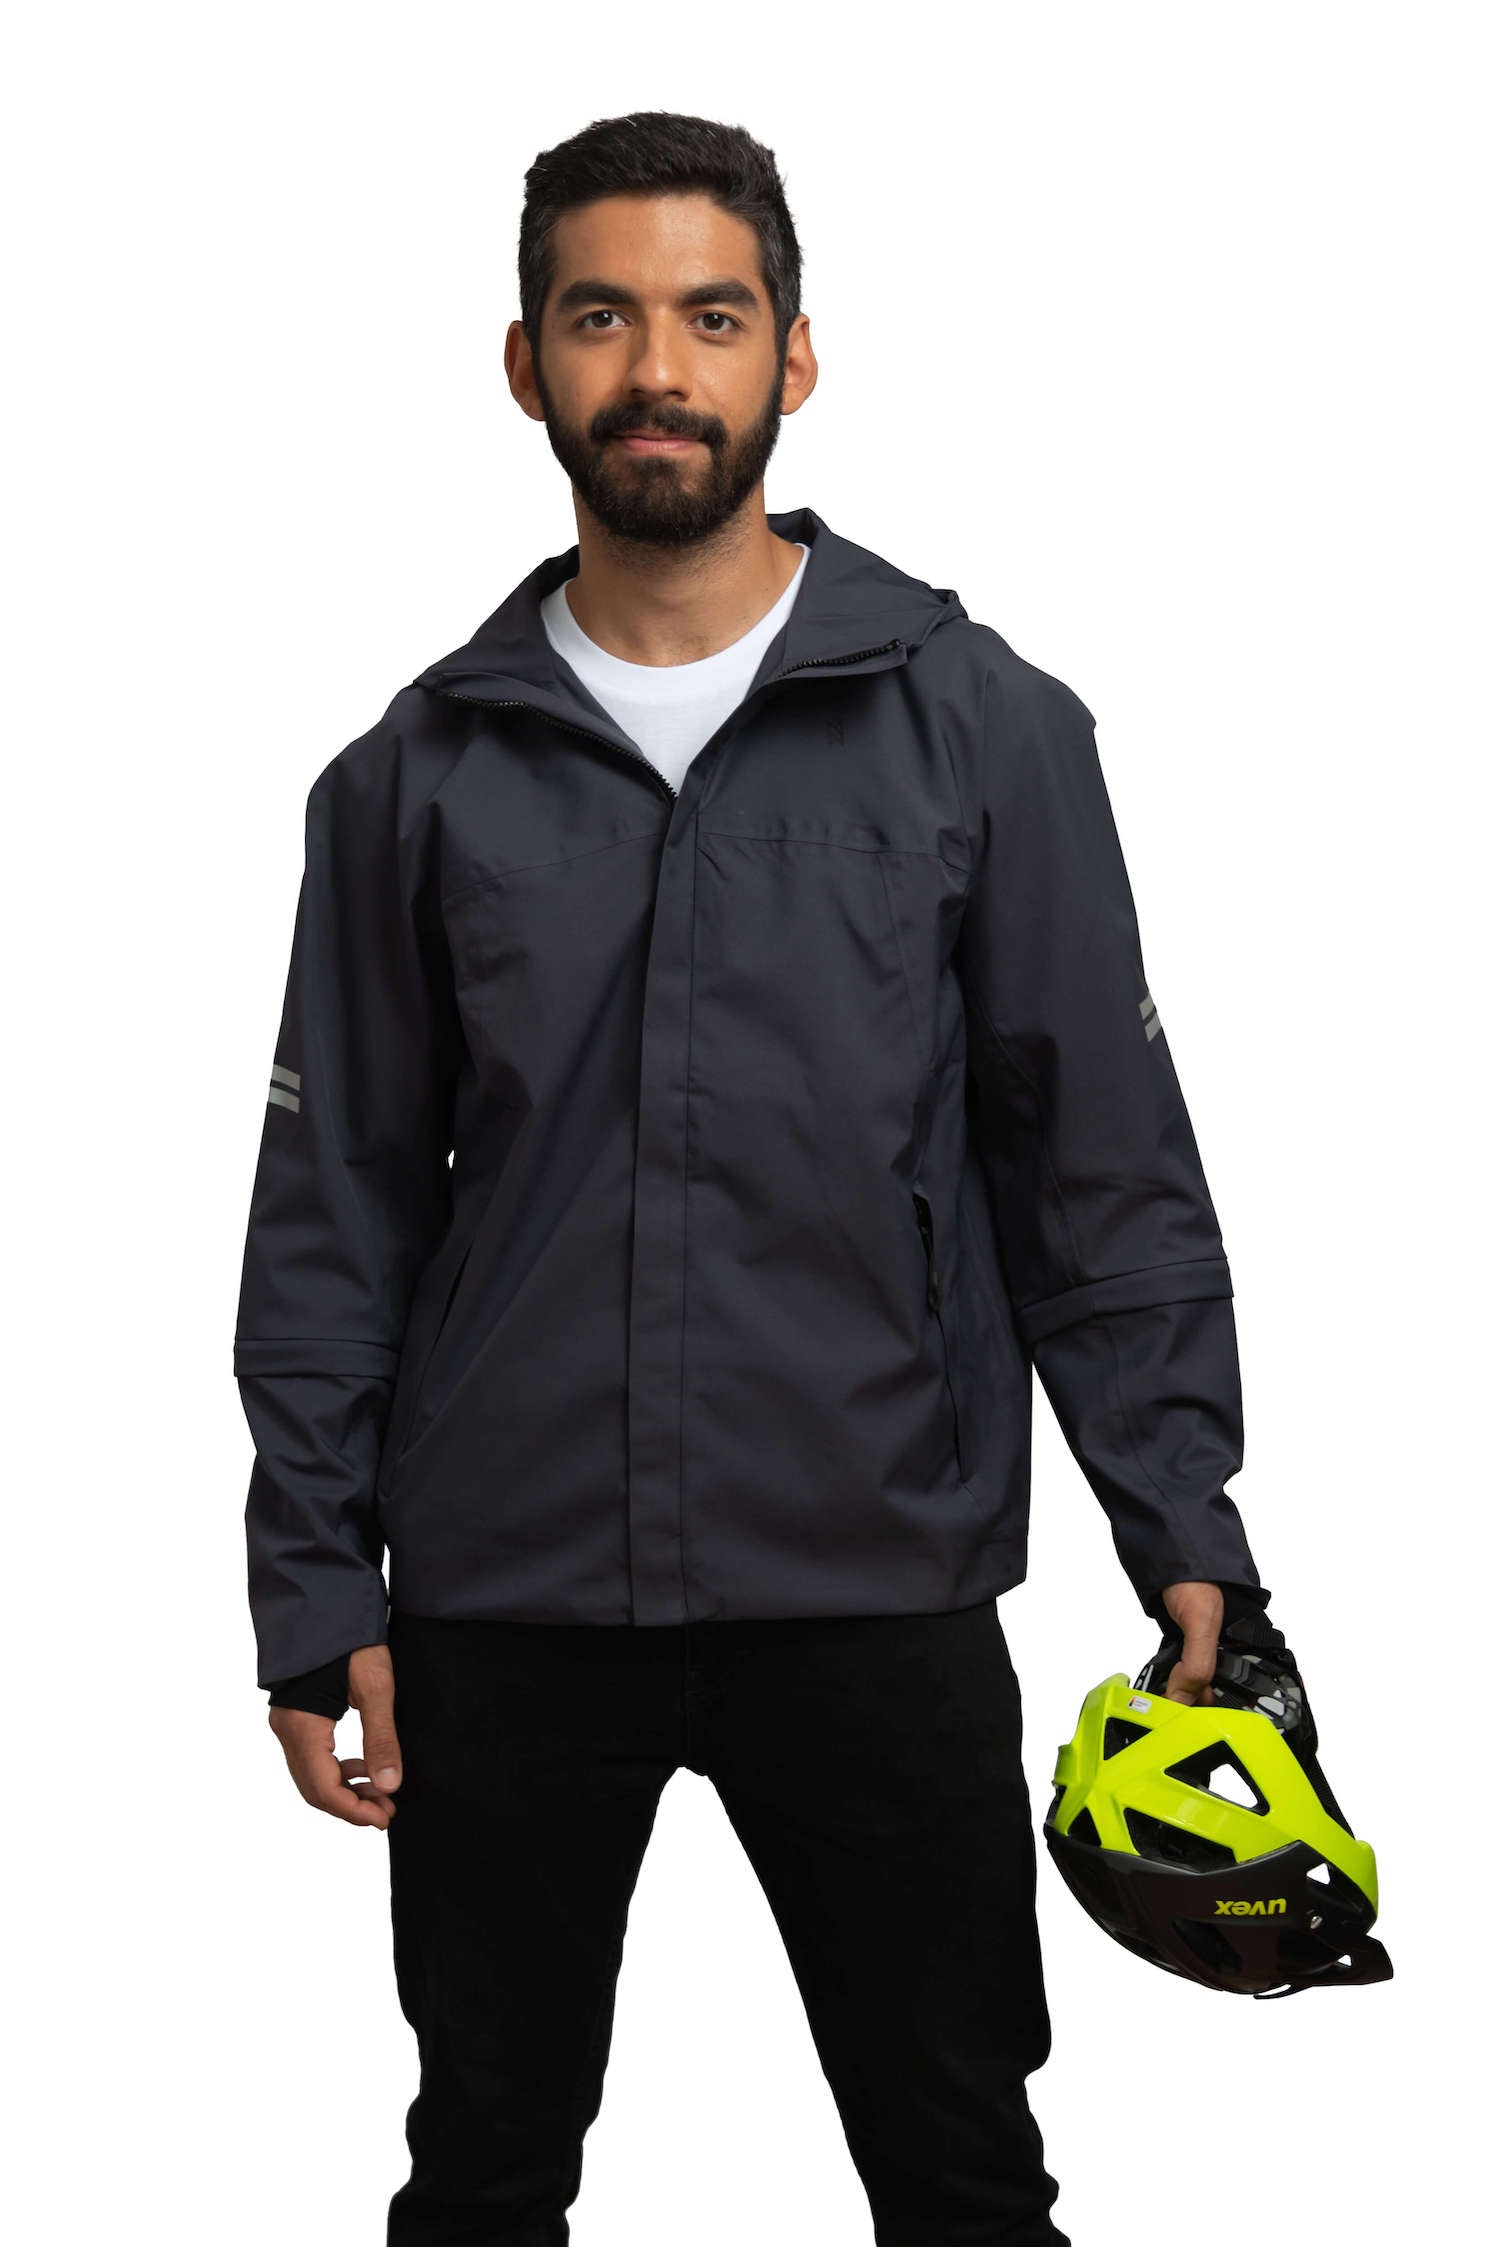 VELLO - MONTREET - The Cyclist - Bicycle Sportswear - Cycling Wear - Bike Gear - Wind Coat - Coat with Zipper and Hood - Windproof